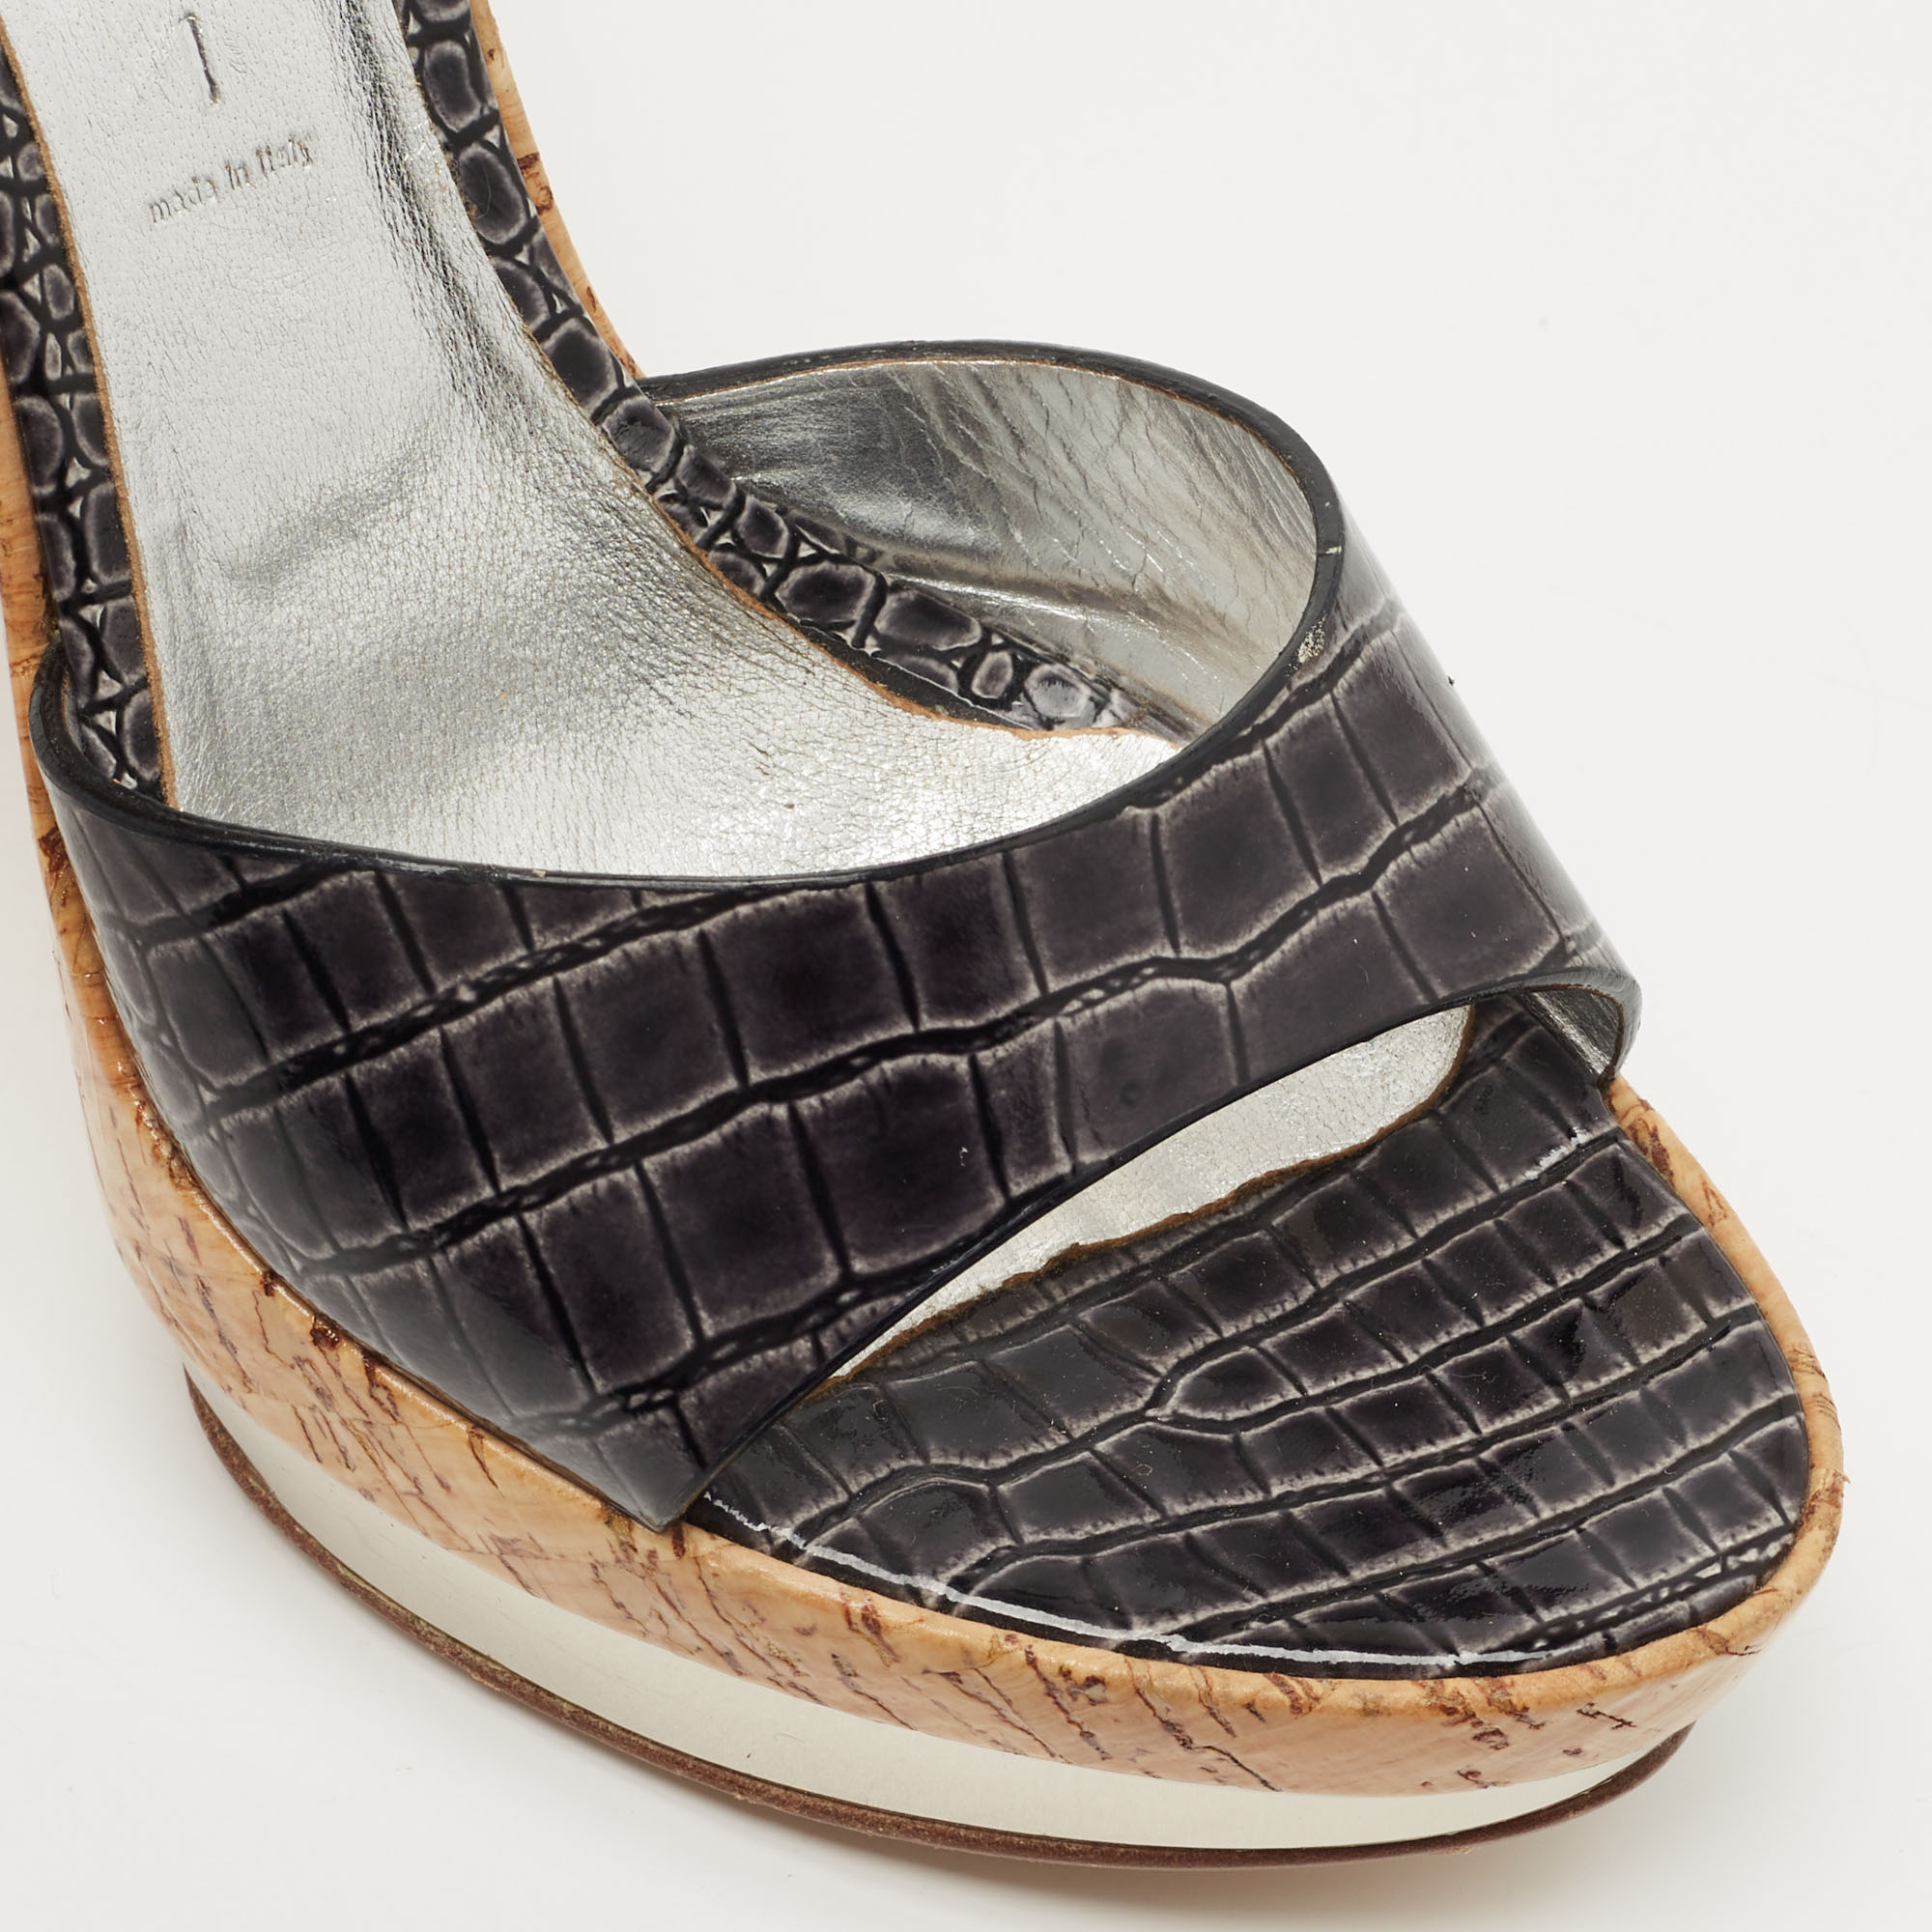 Casadei Black Croc Embossed Patent Leather Cork Platform Sandals Size 39